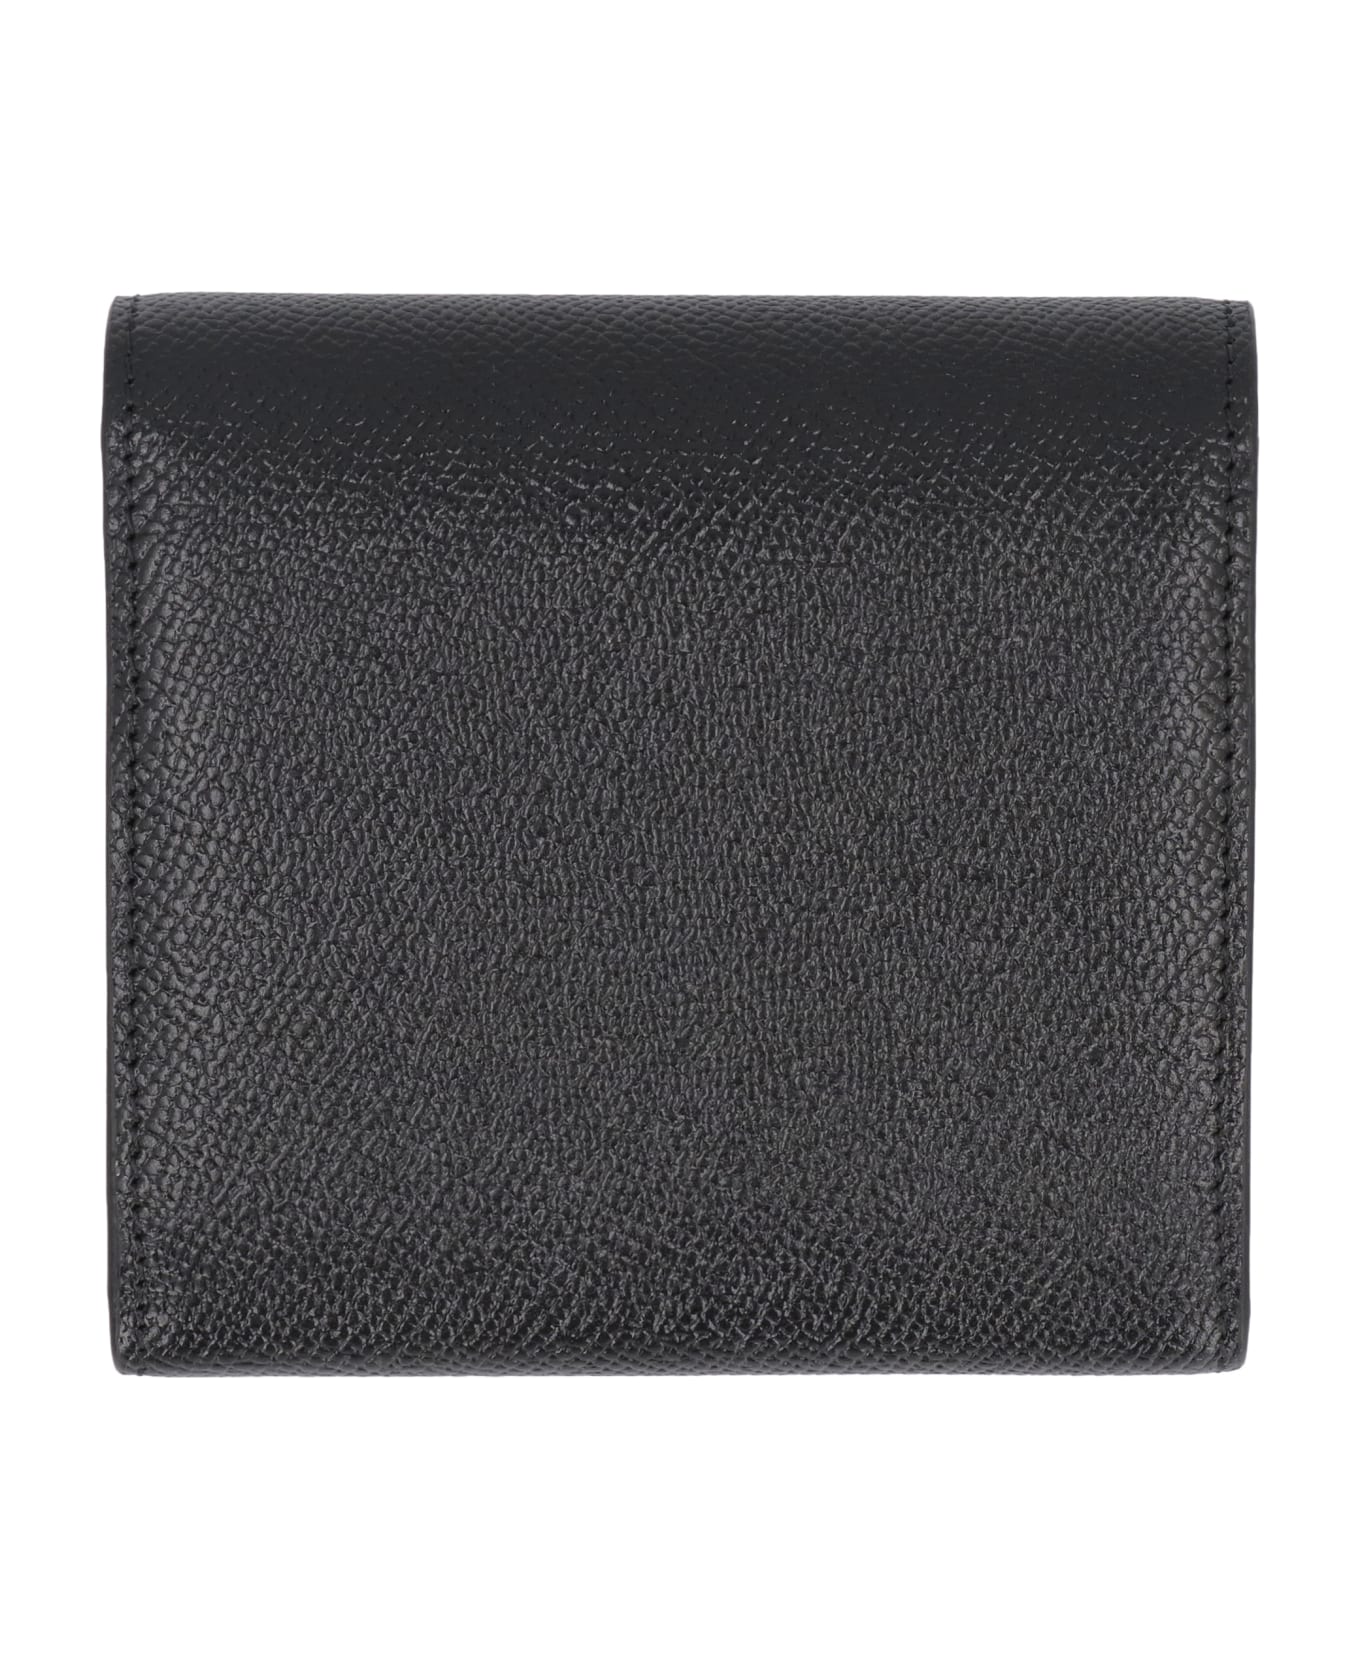 Ami Alexandre Mattiussi Leather Wallet - black